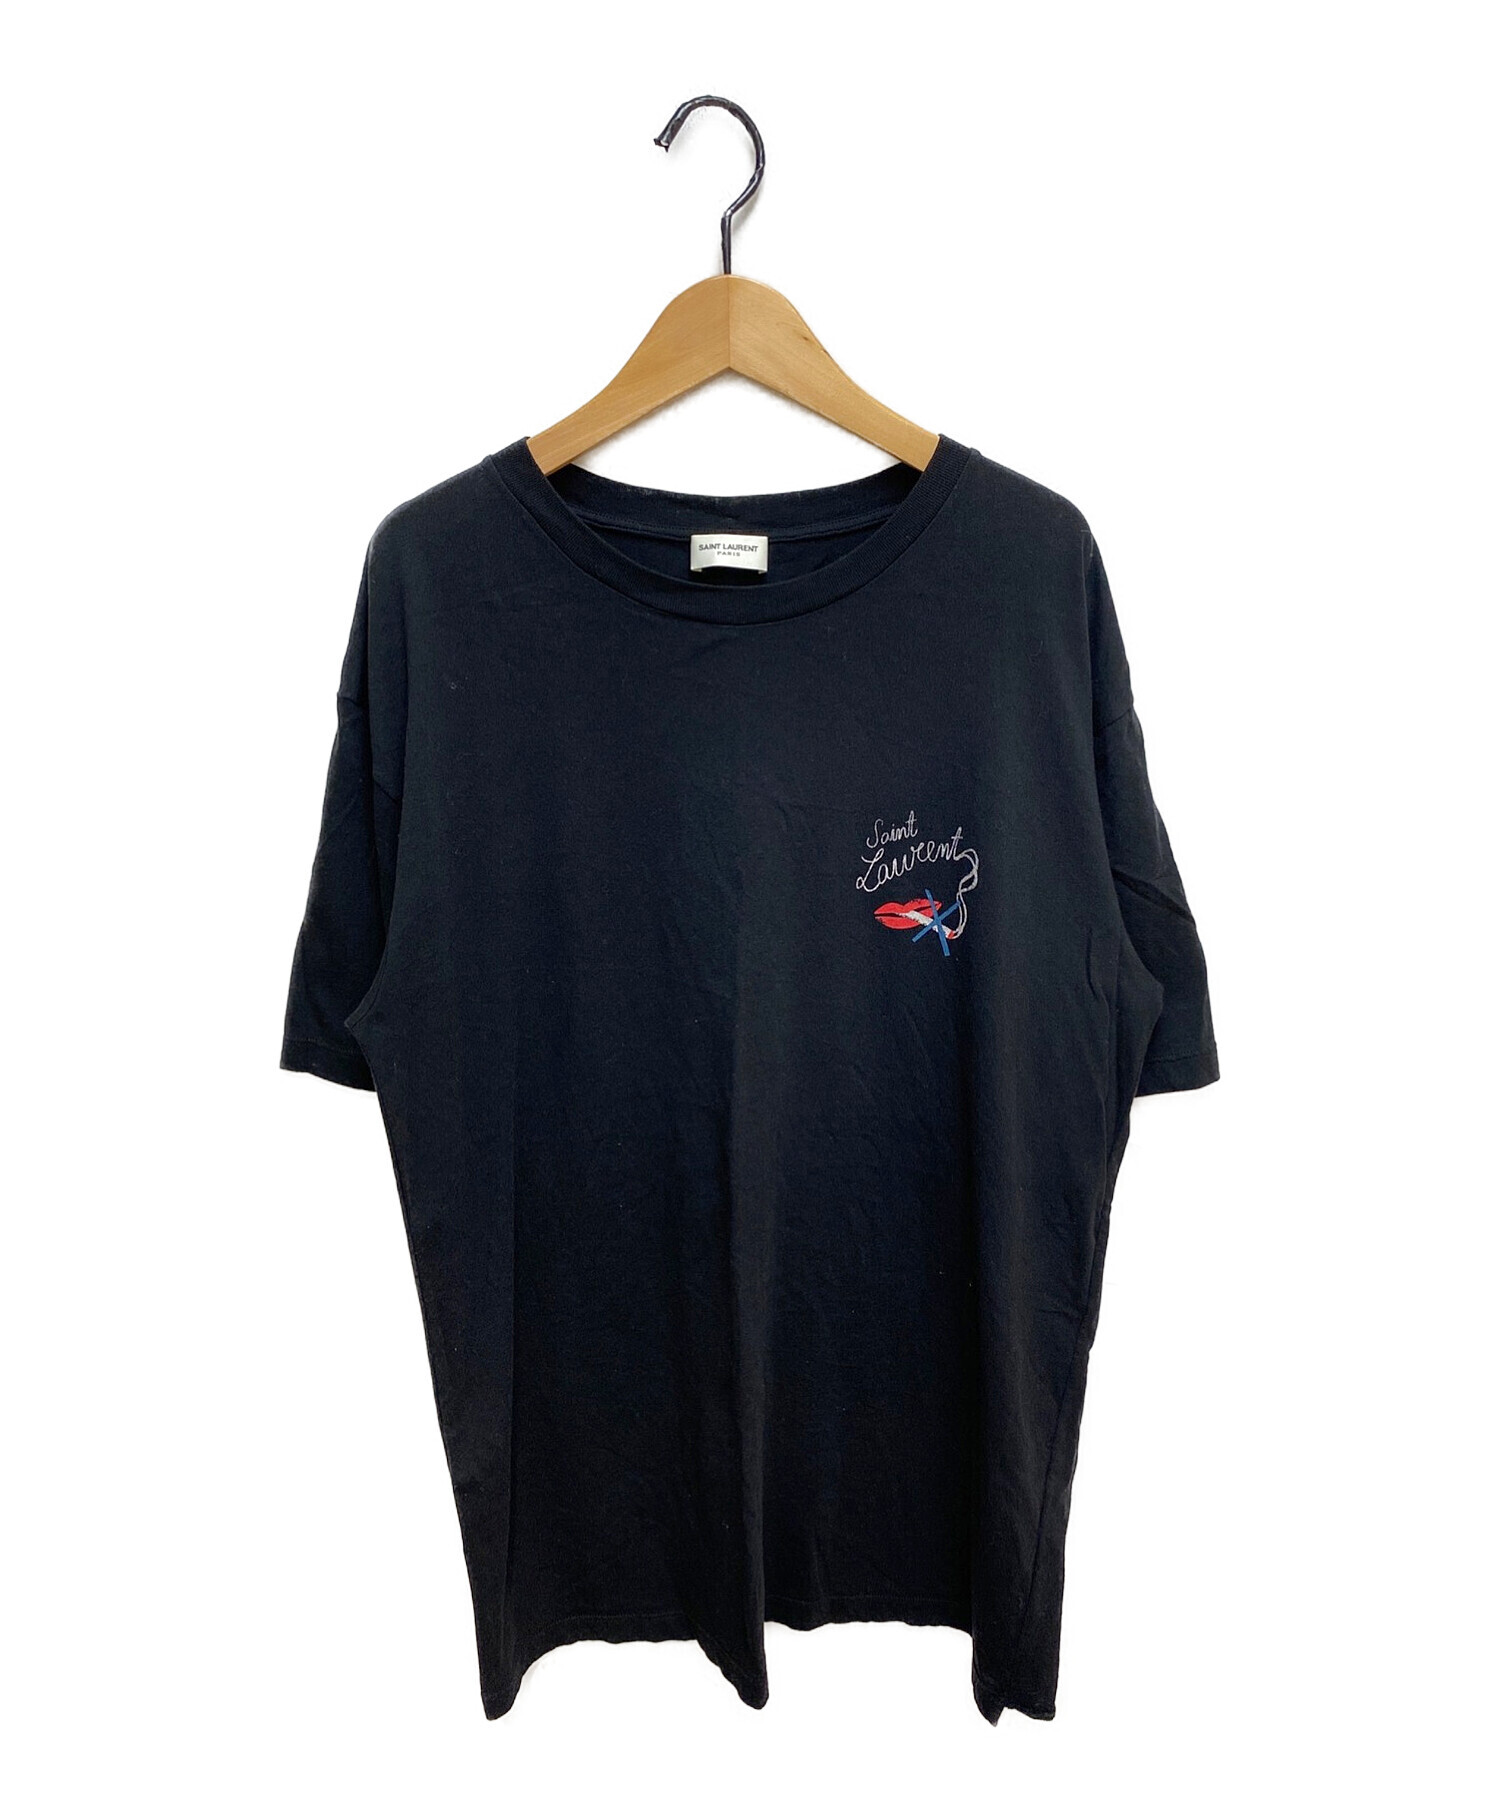 Saint Laurent Paris (サンローランパリ) スモーキングTシャツ ブラック サイズ:S